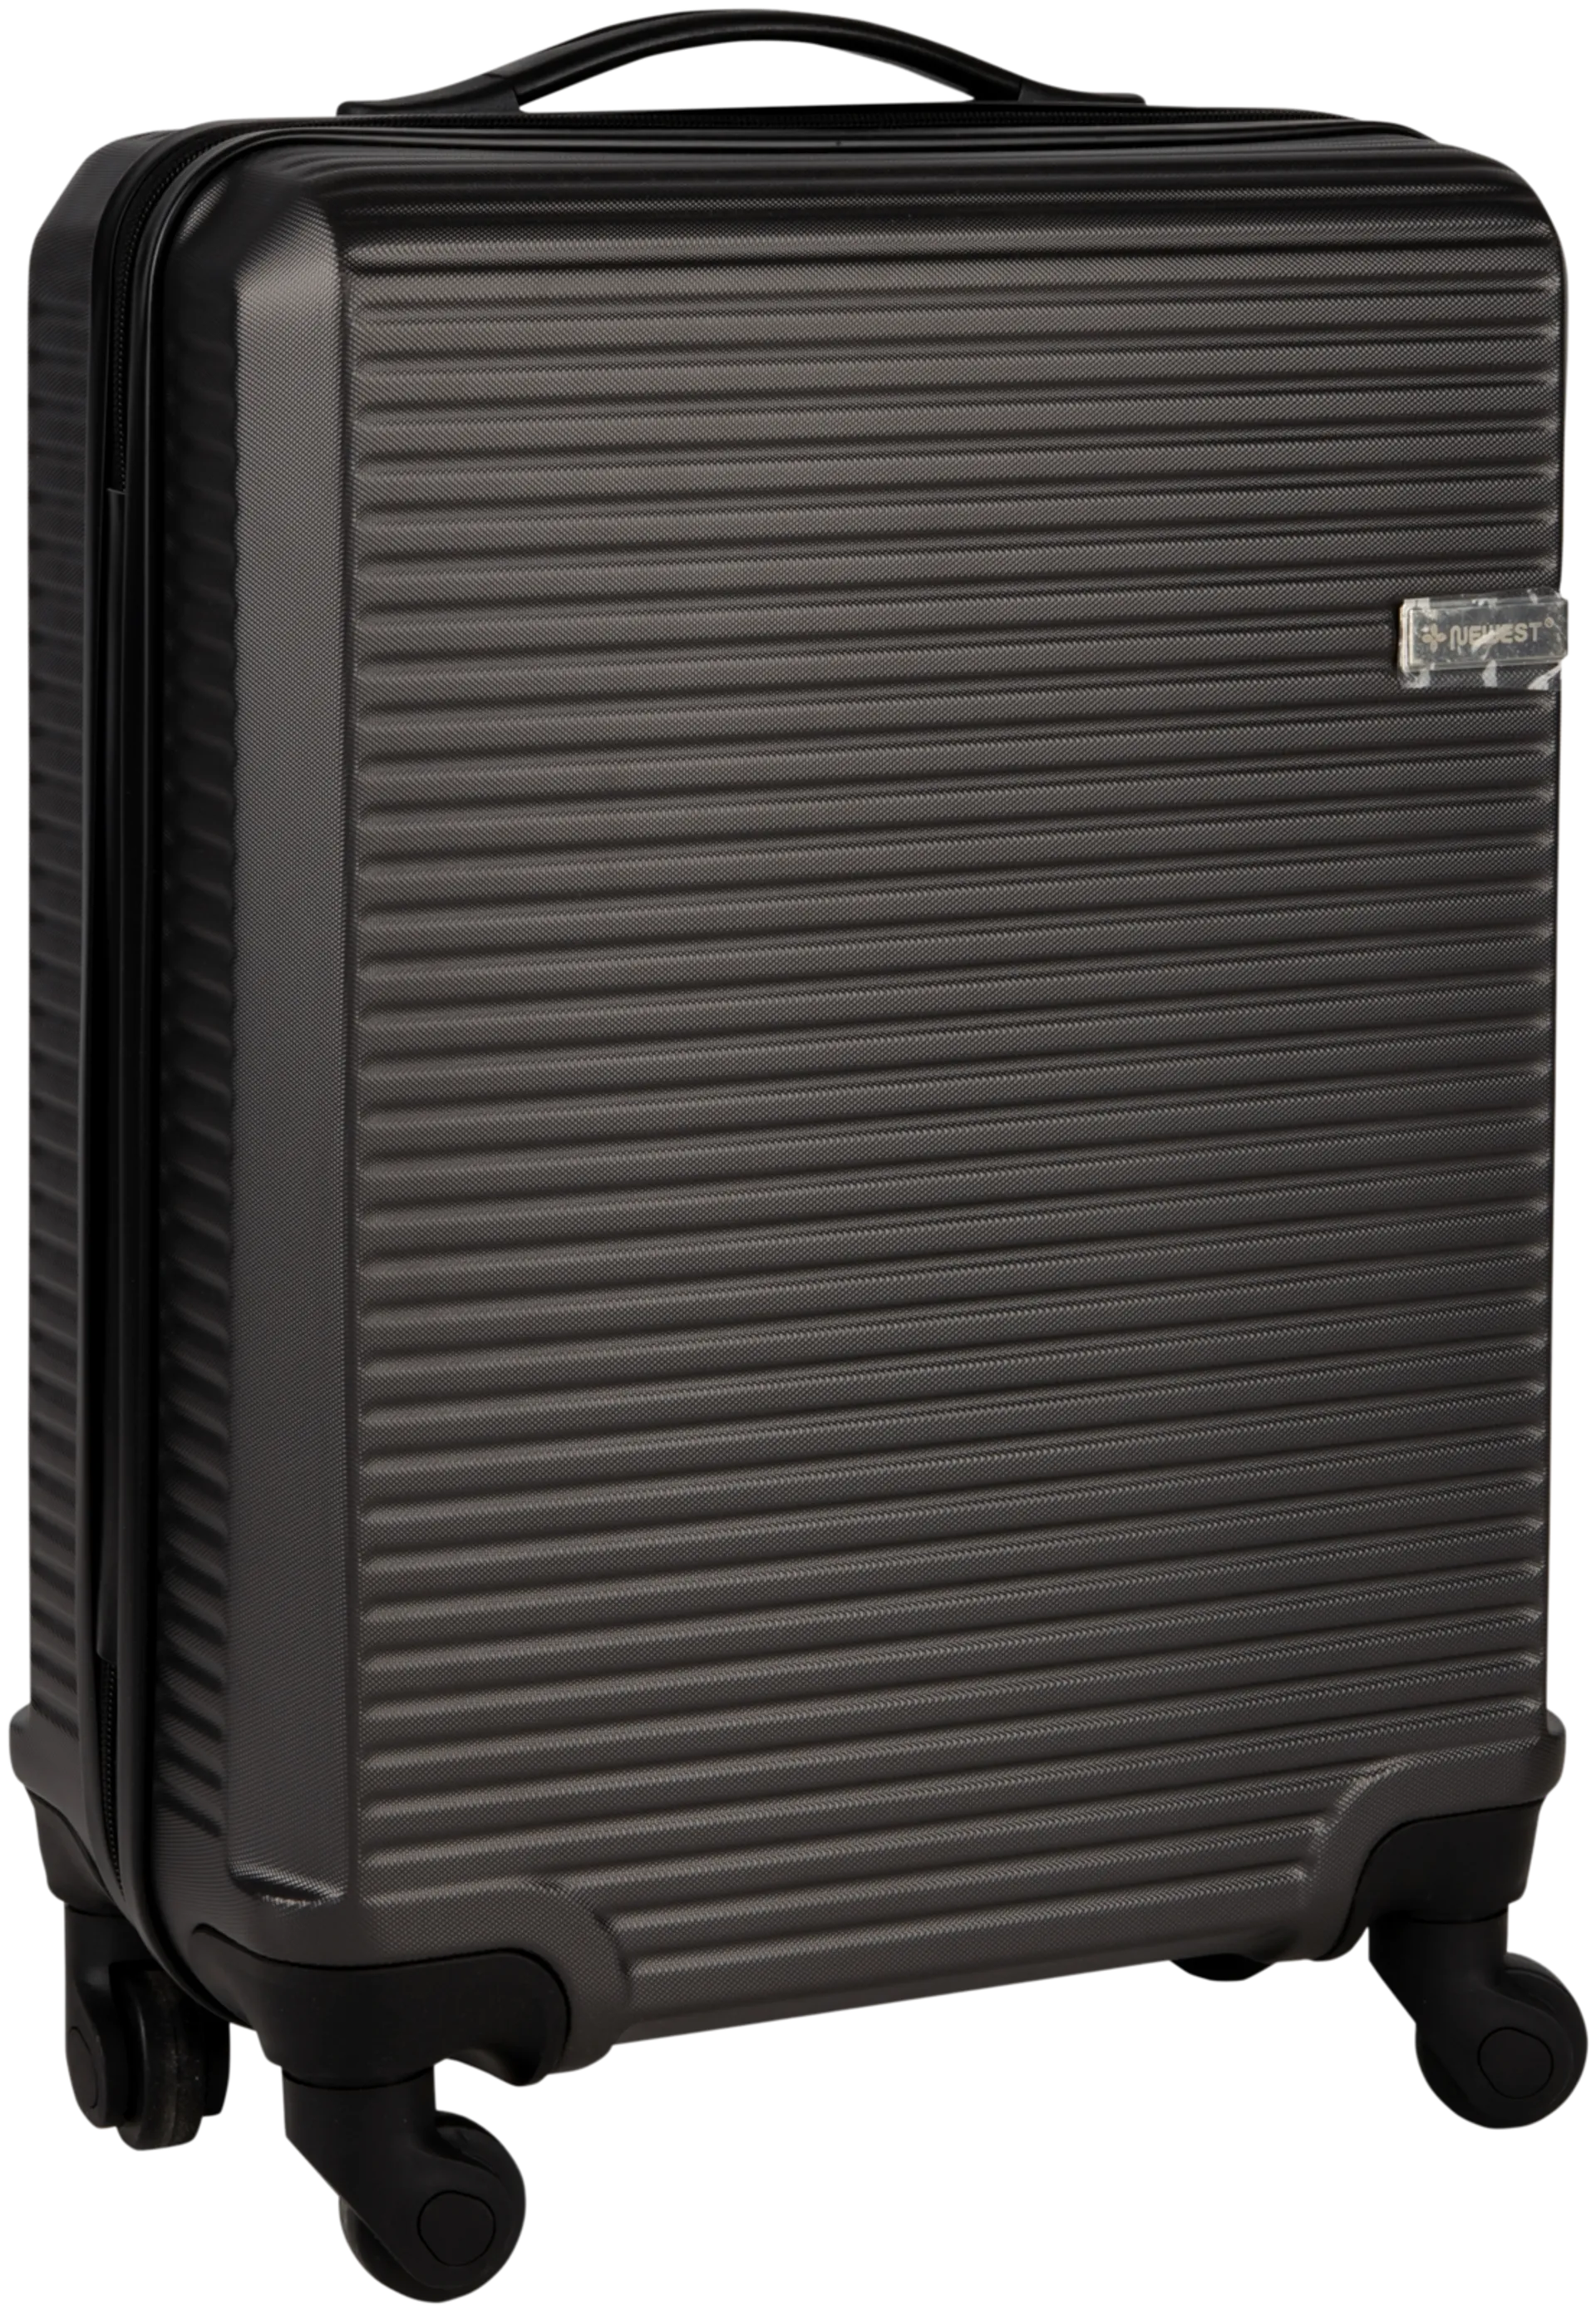 Newest matkalaukku 19S-A1 55cm - Grey